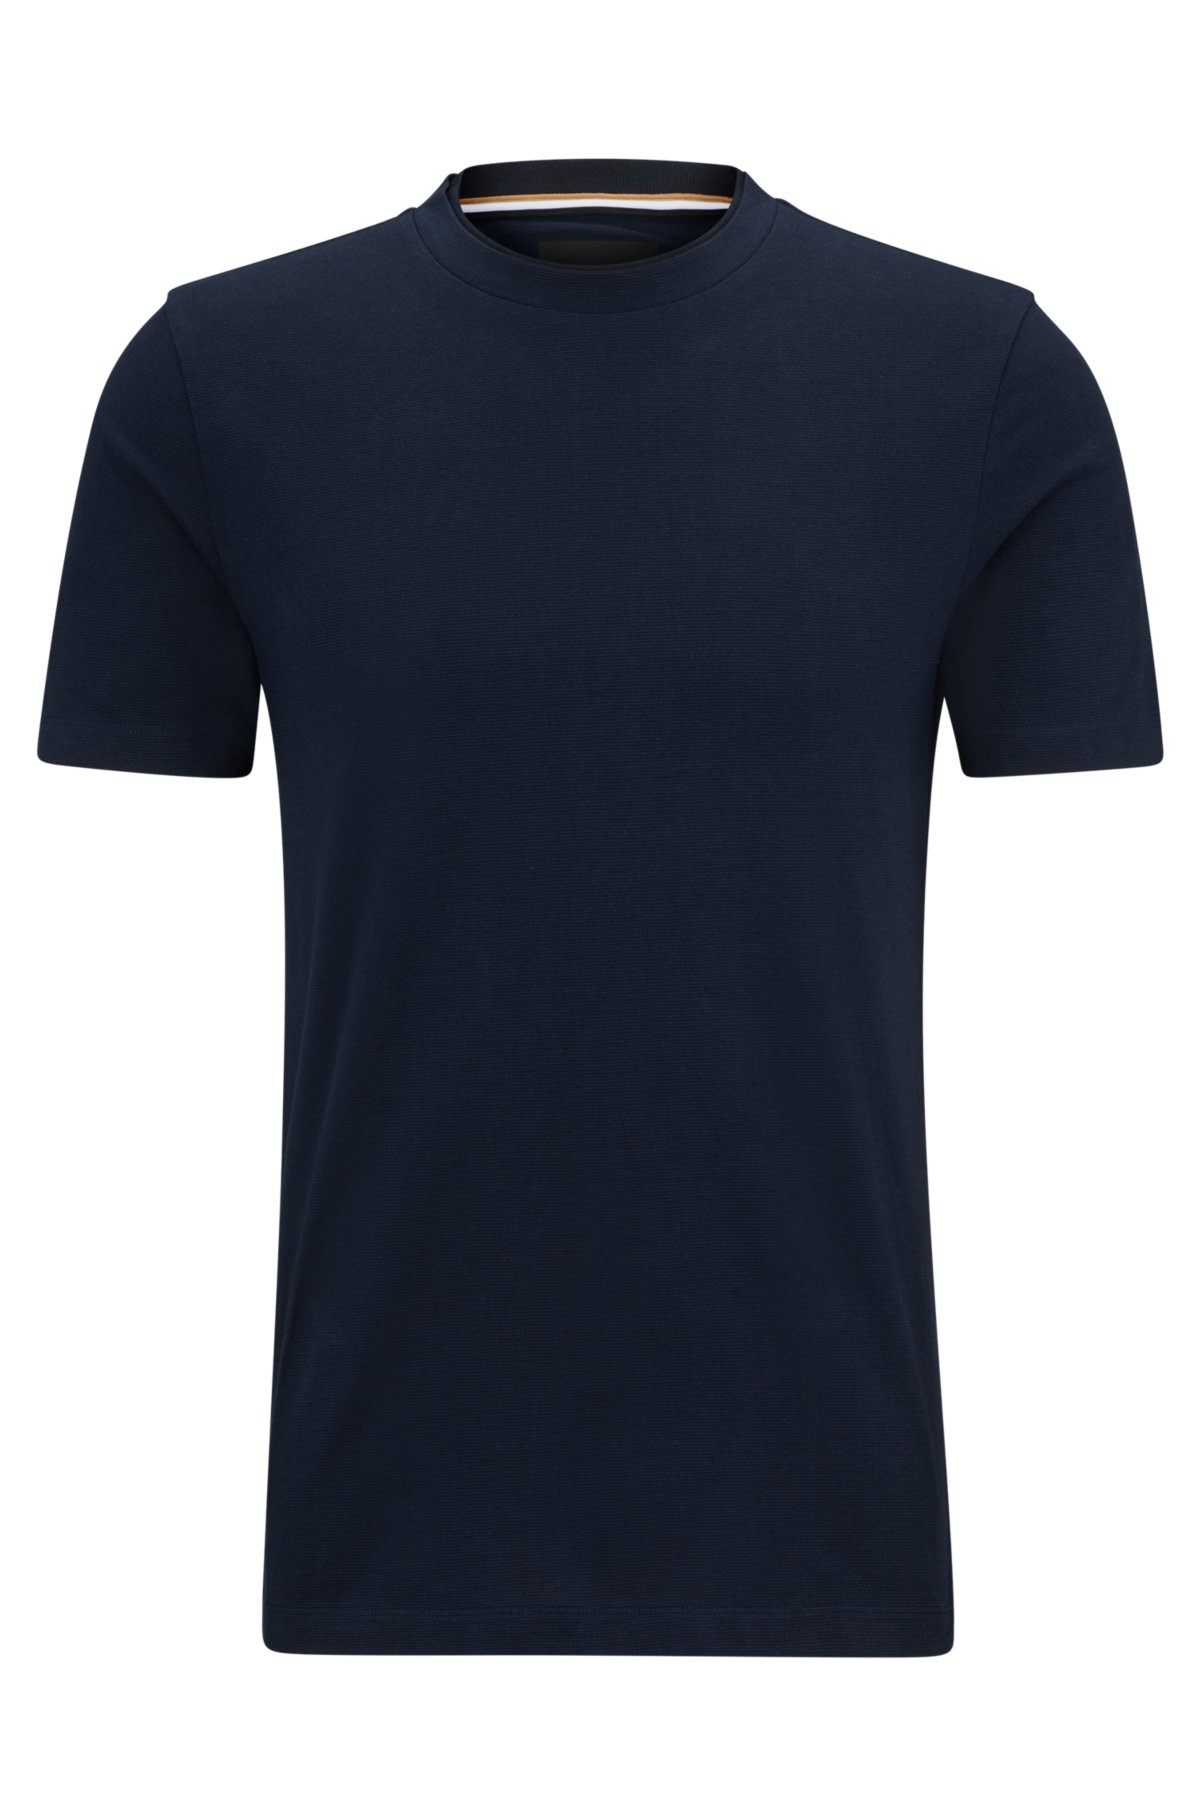 Louis Vuitton Dark Blue Logo Print Striped Cotton Knit T-Shirt XL